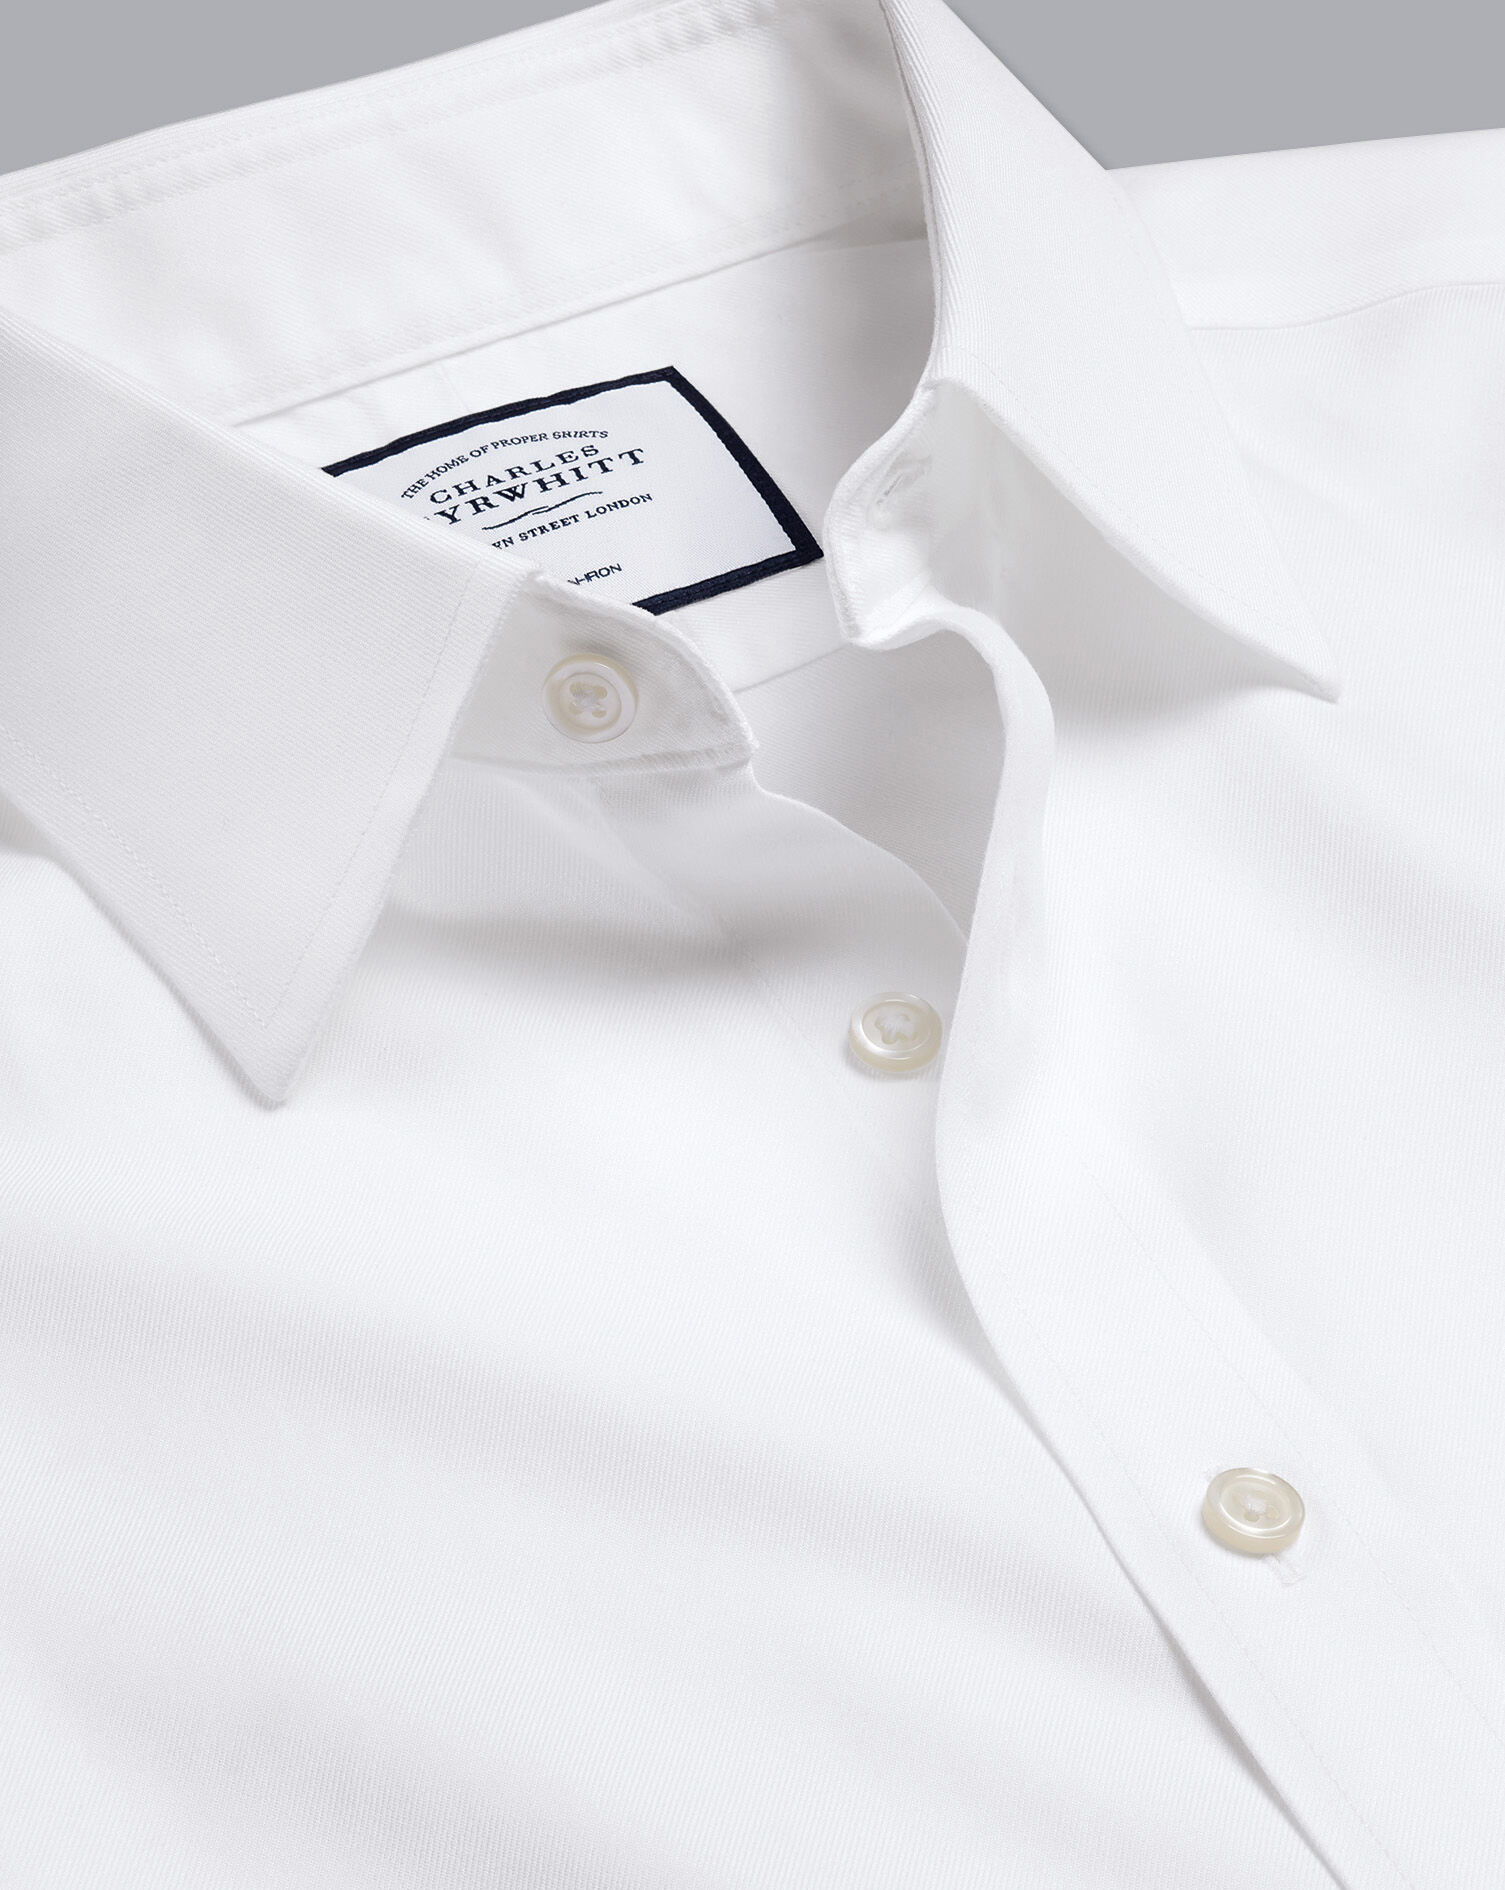 Men's Dress Shirts and Formal Shirts | Charles Tyrwhitt